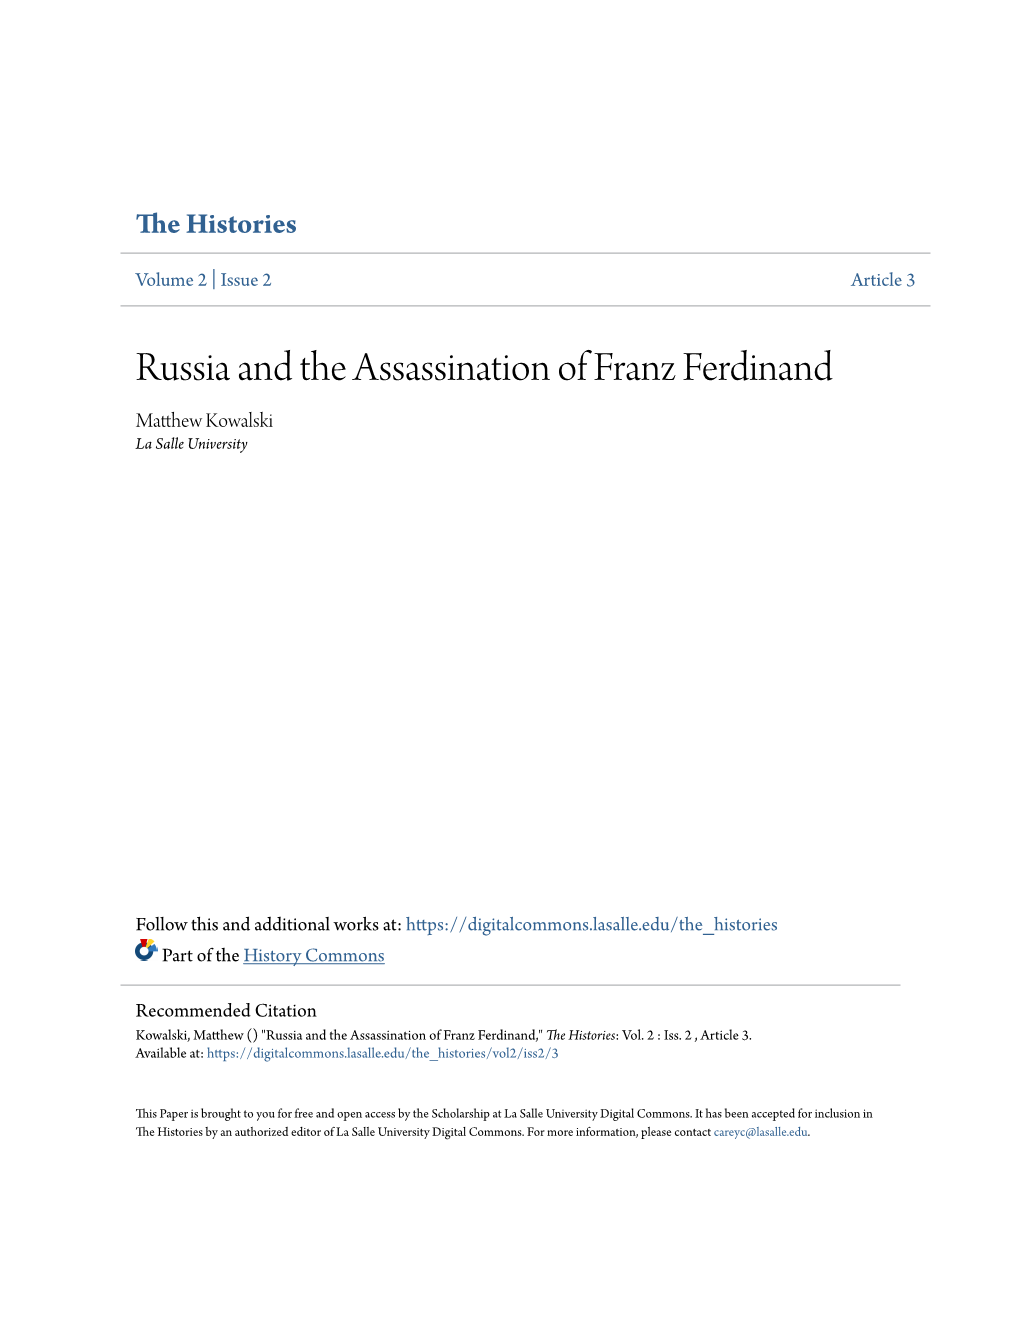 Russia and the Assassination of Franz Ferdinand Matthew Kowalski La Salle University